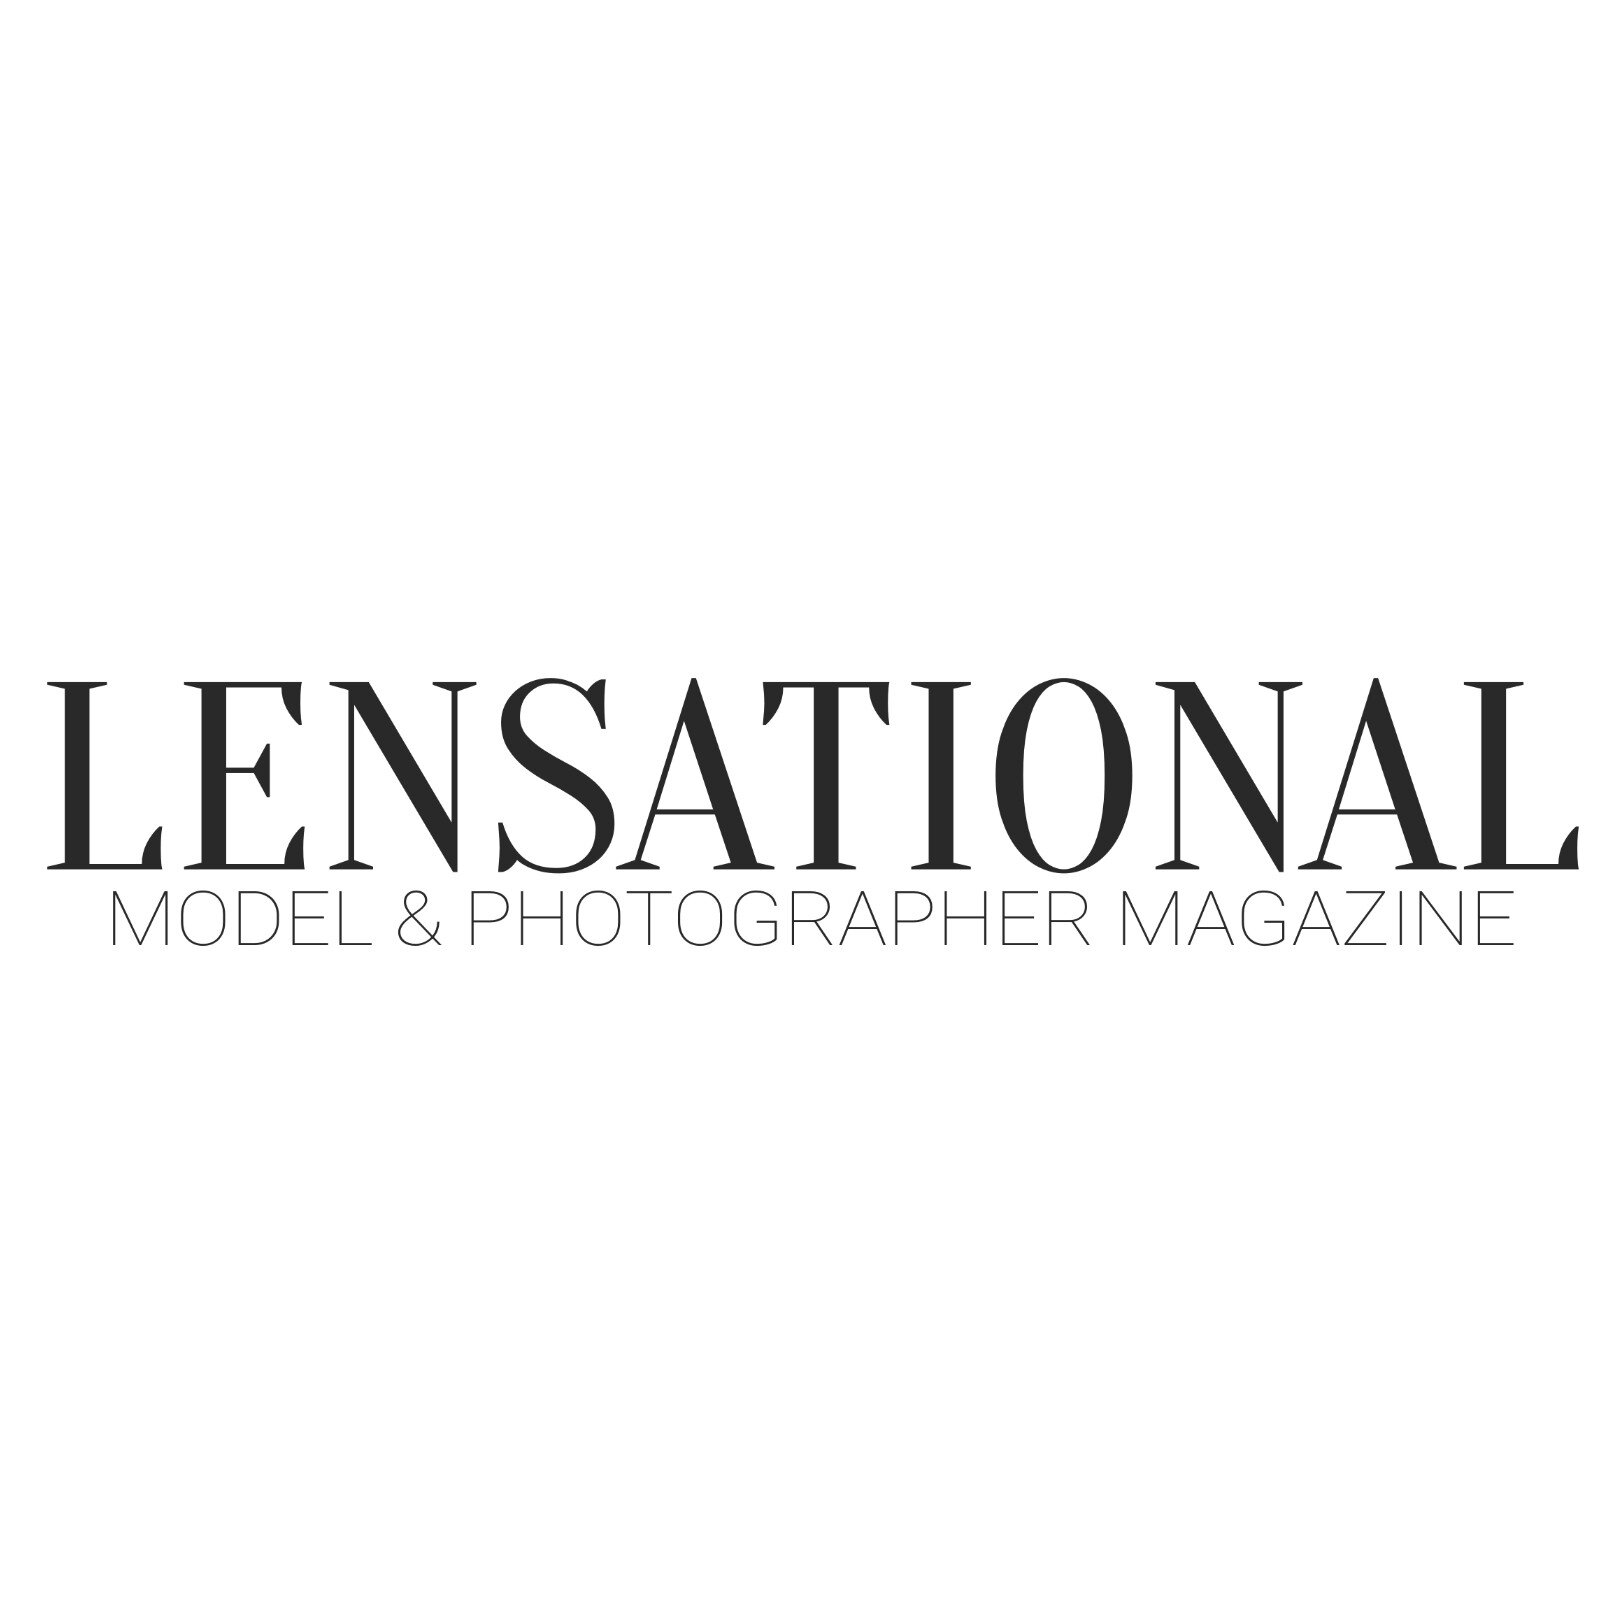 Lernsational Magazine.jpg